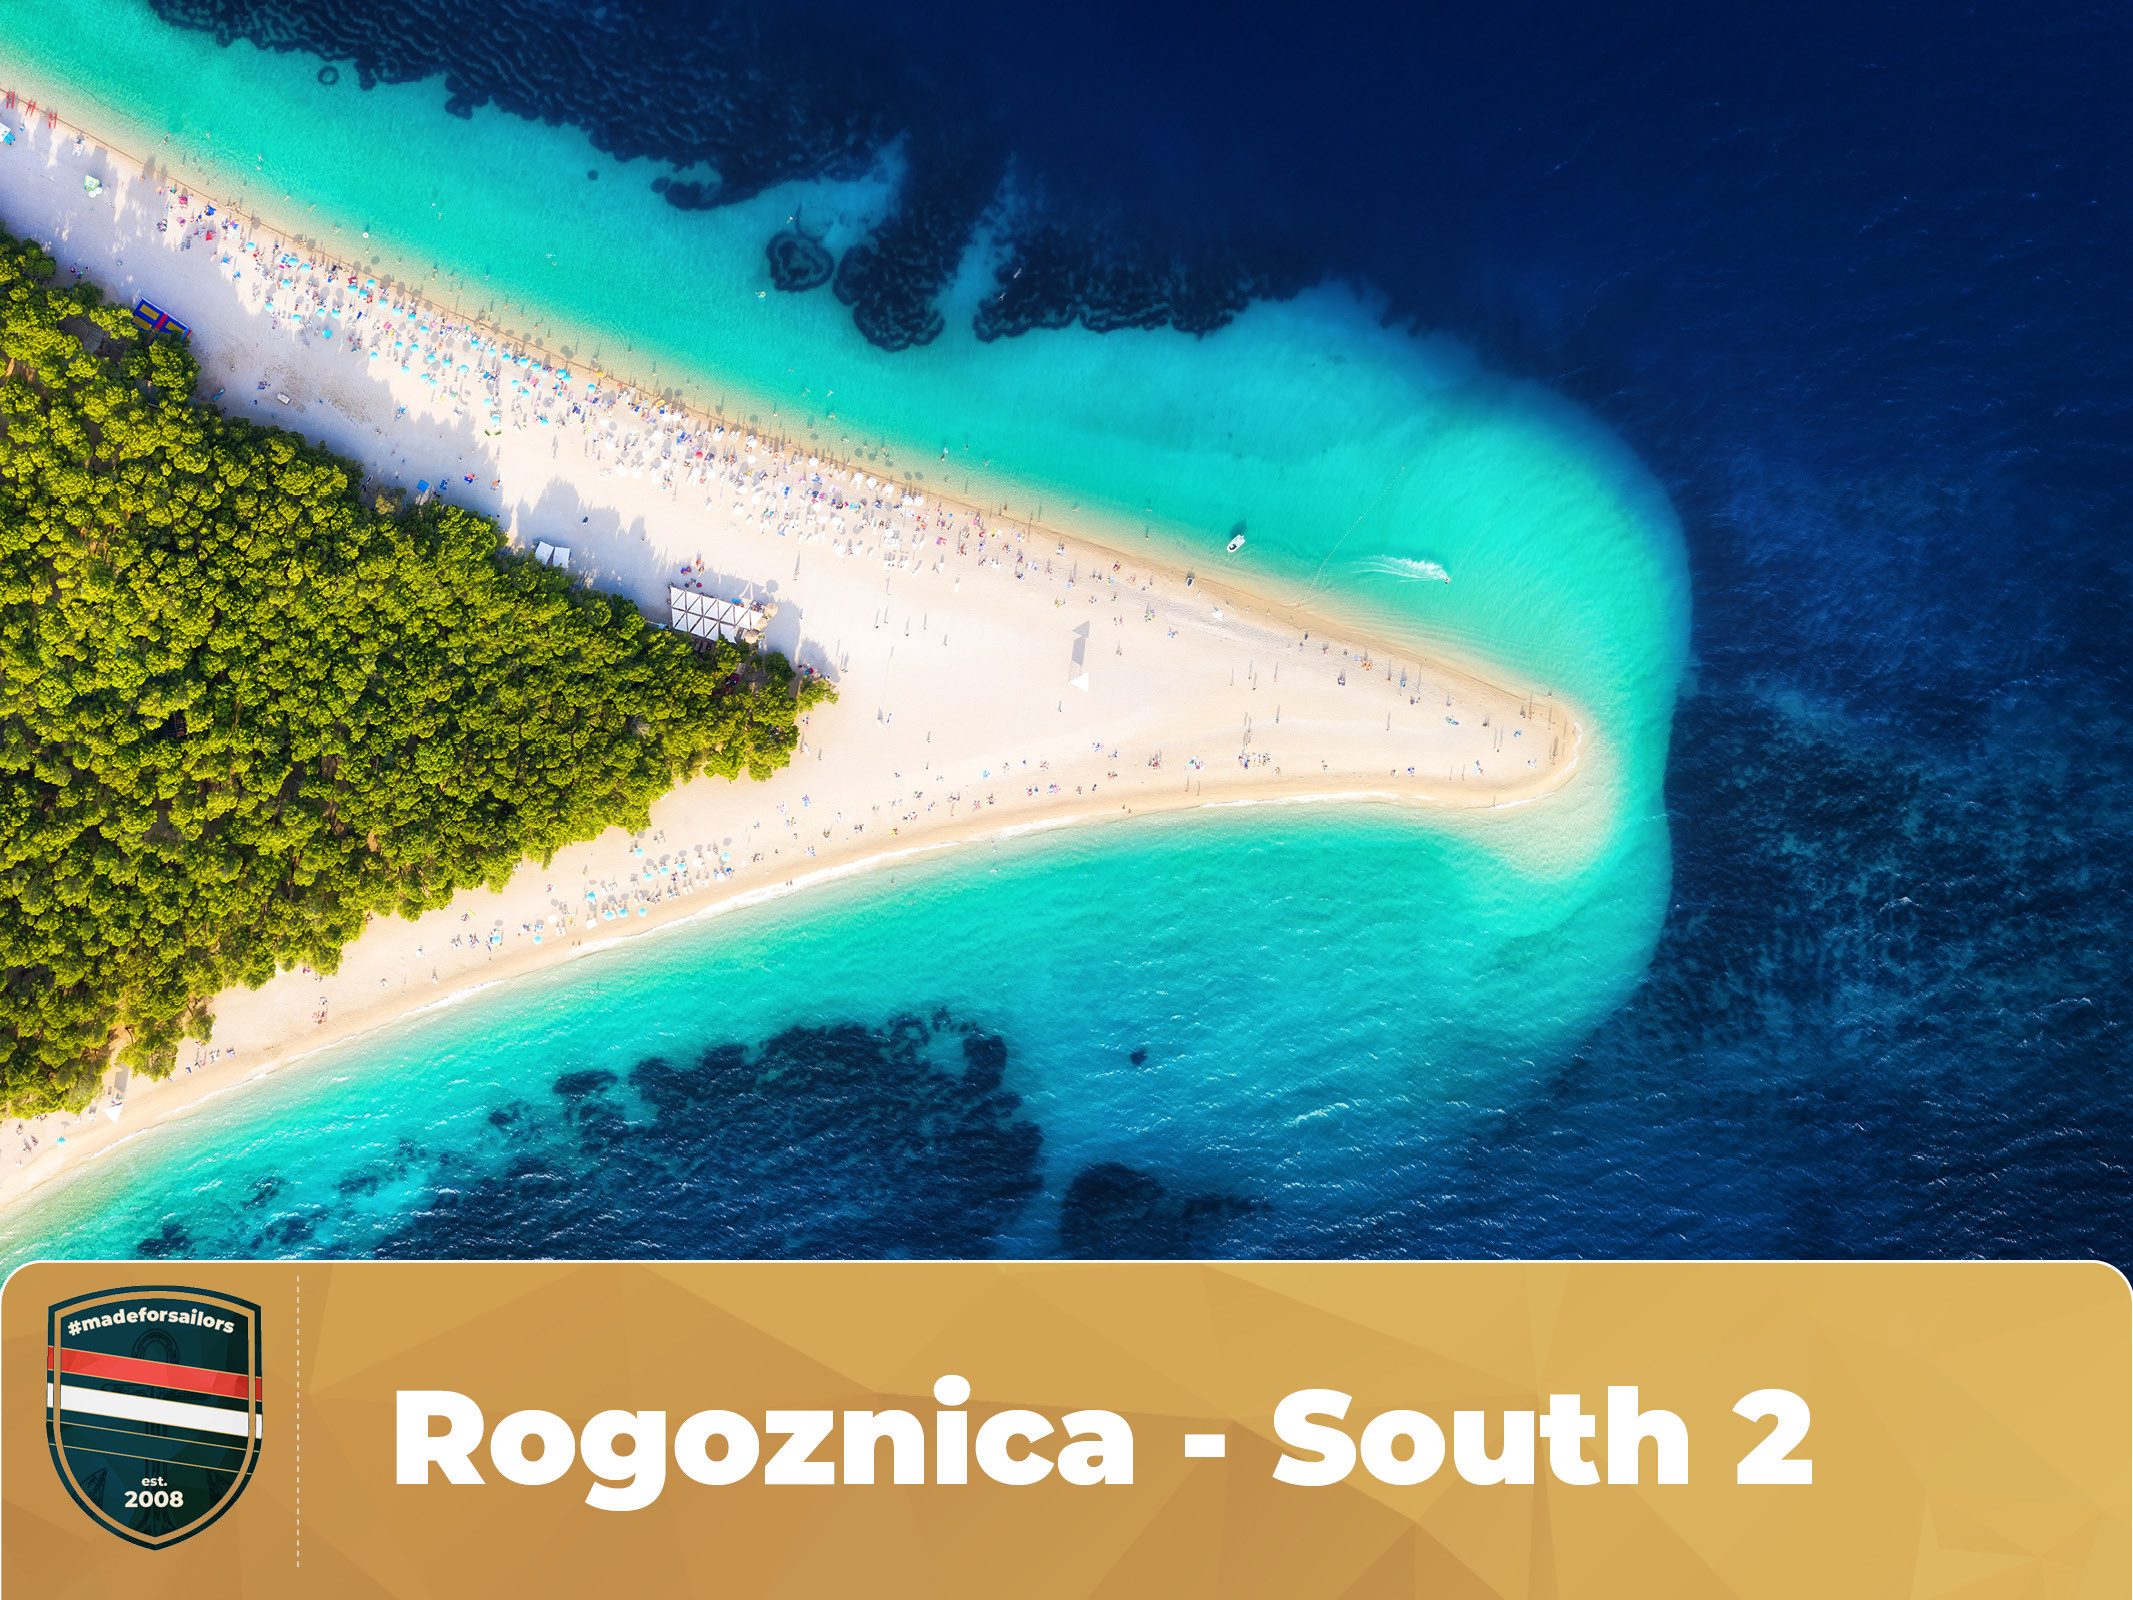 Rogoznica - South 2 Route